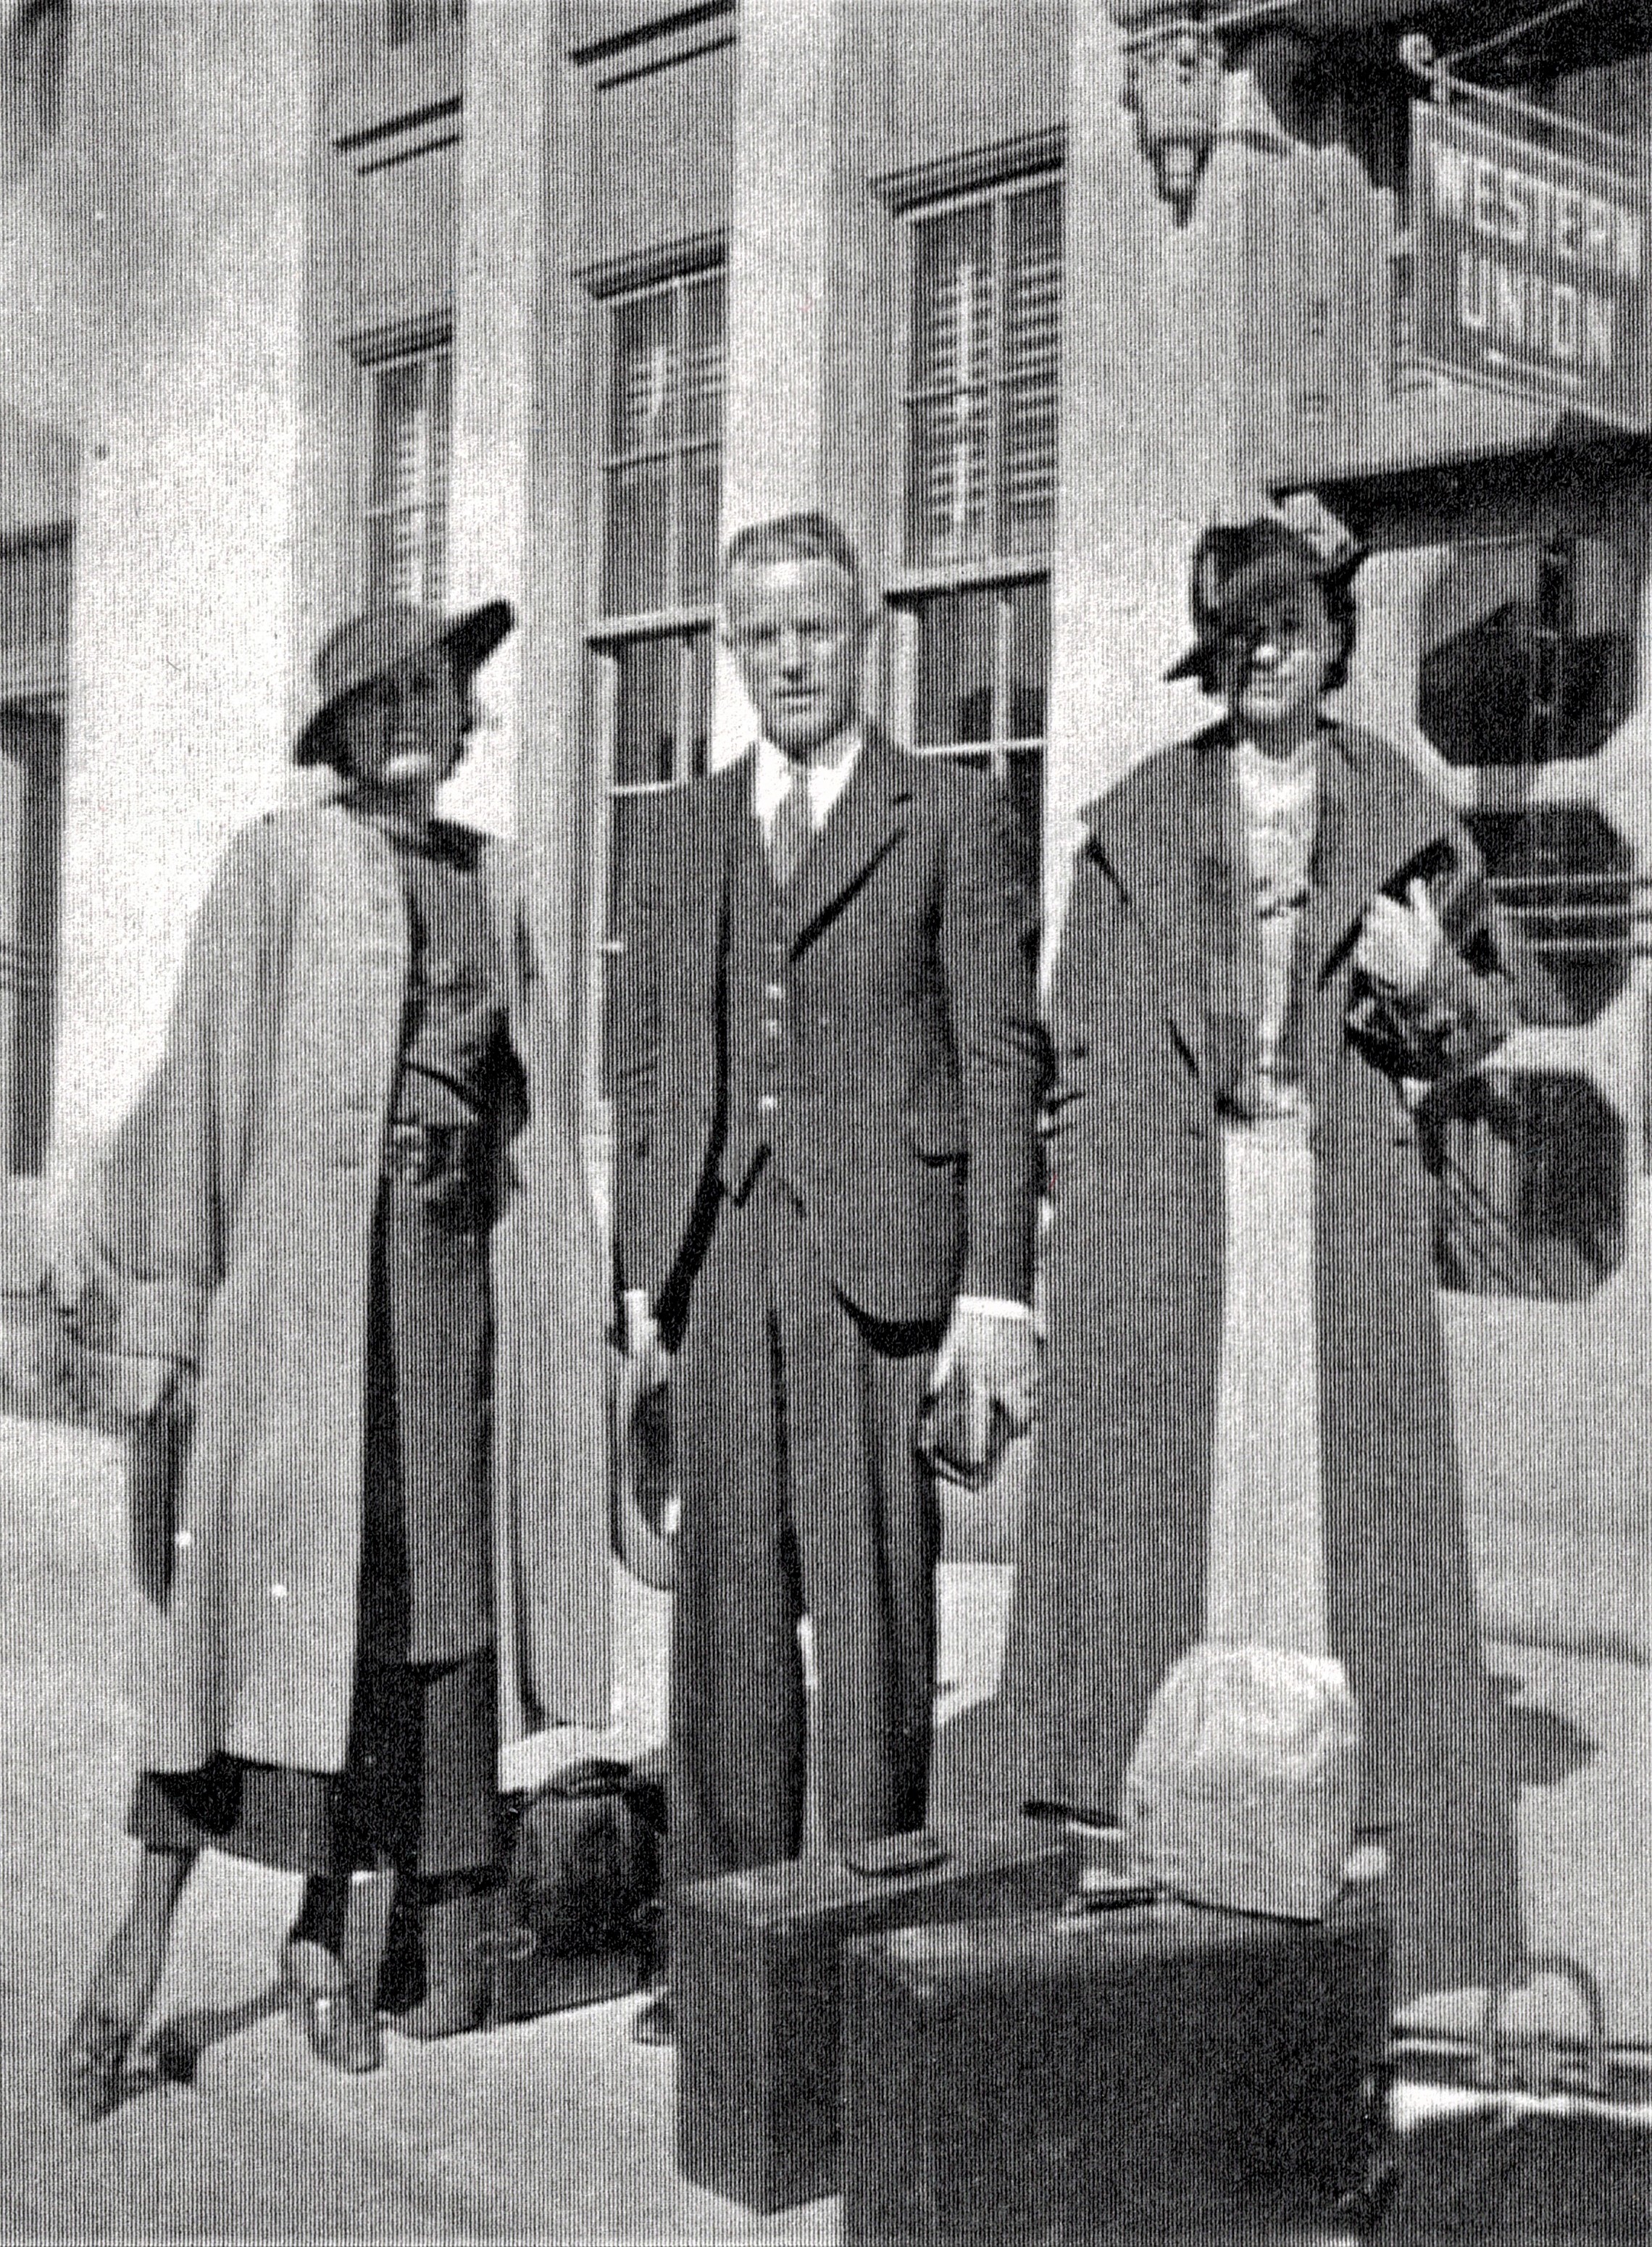 California Mission January 30, 1936